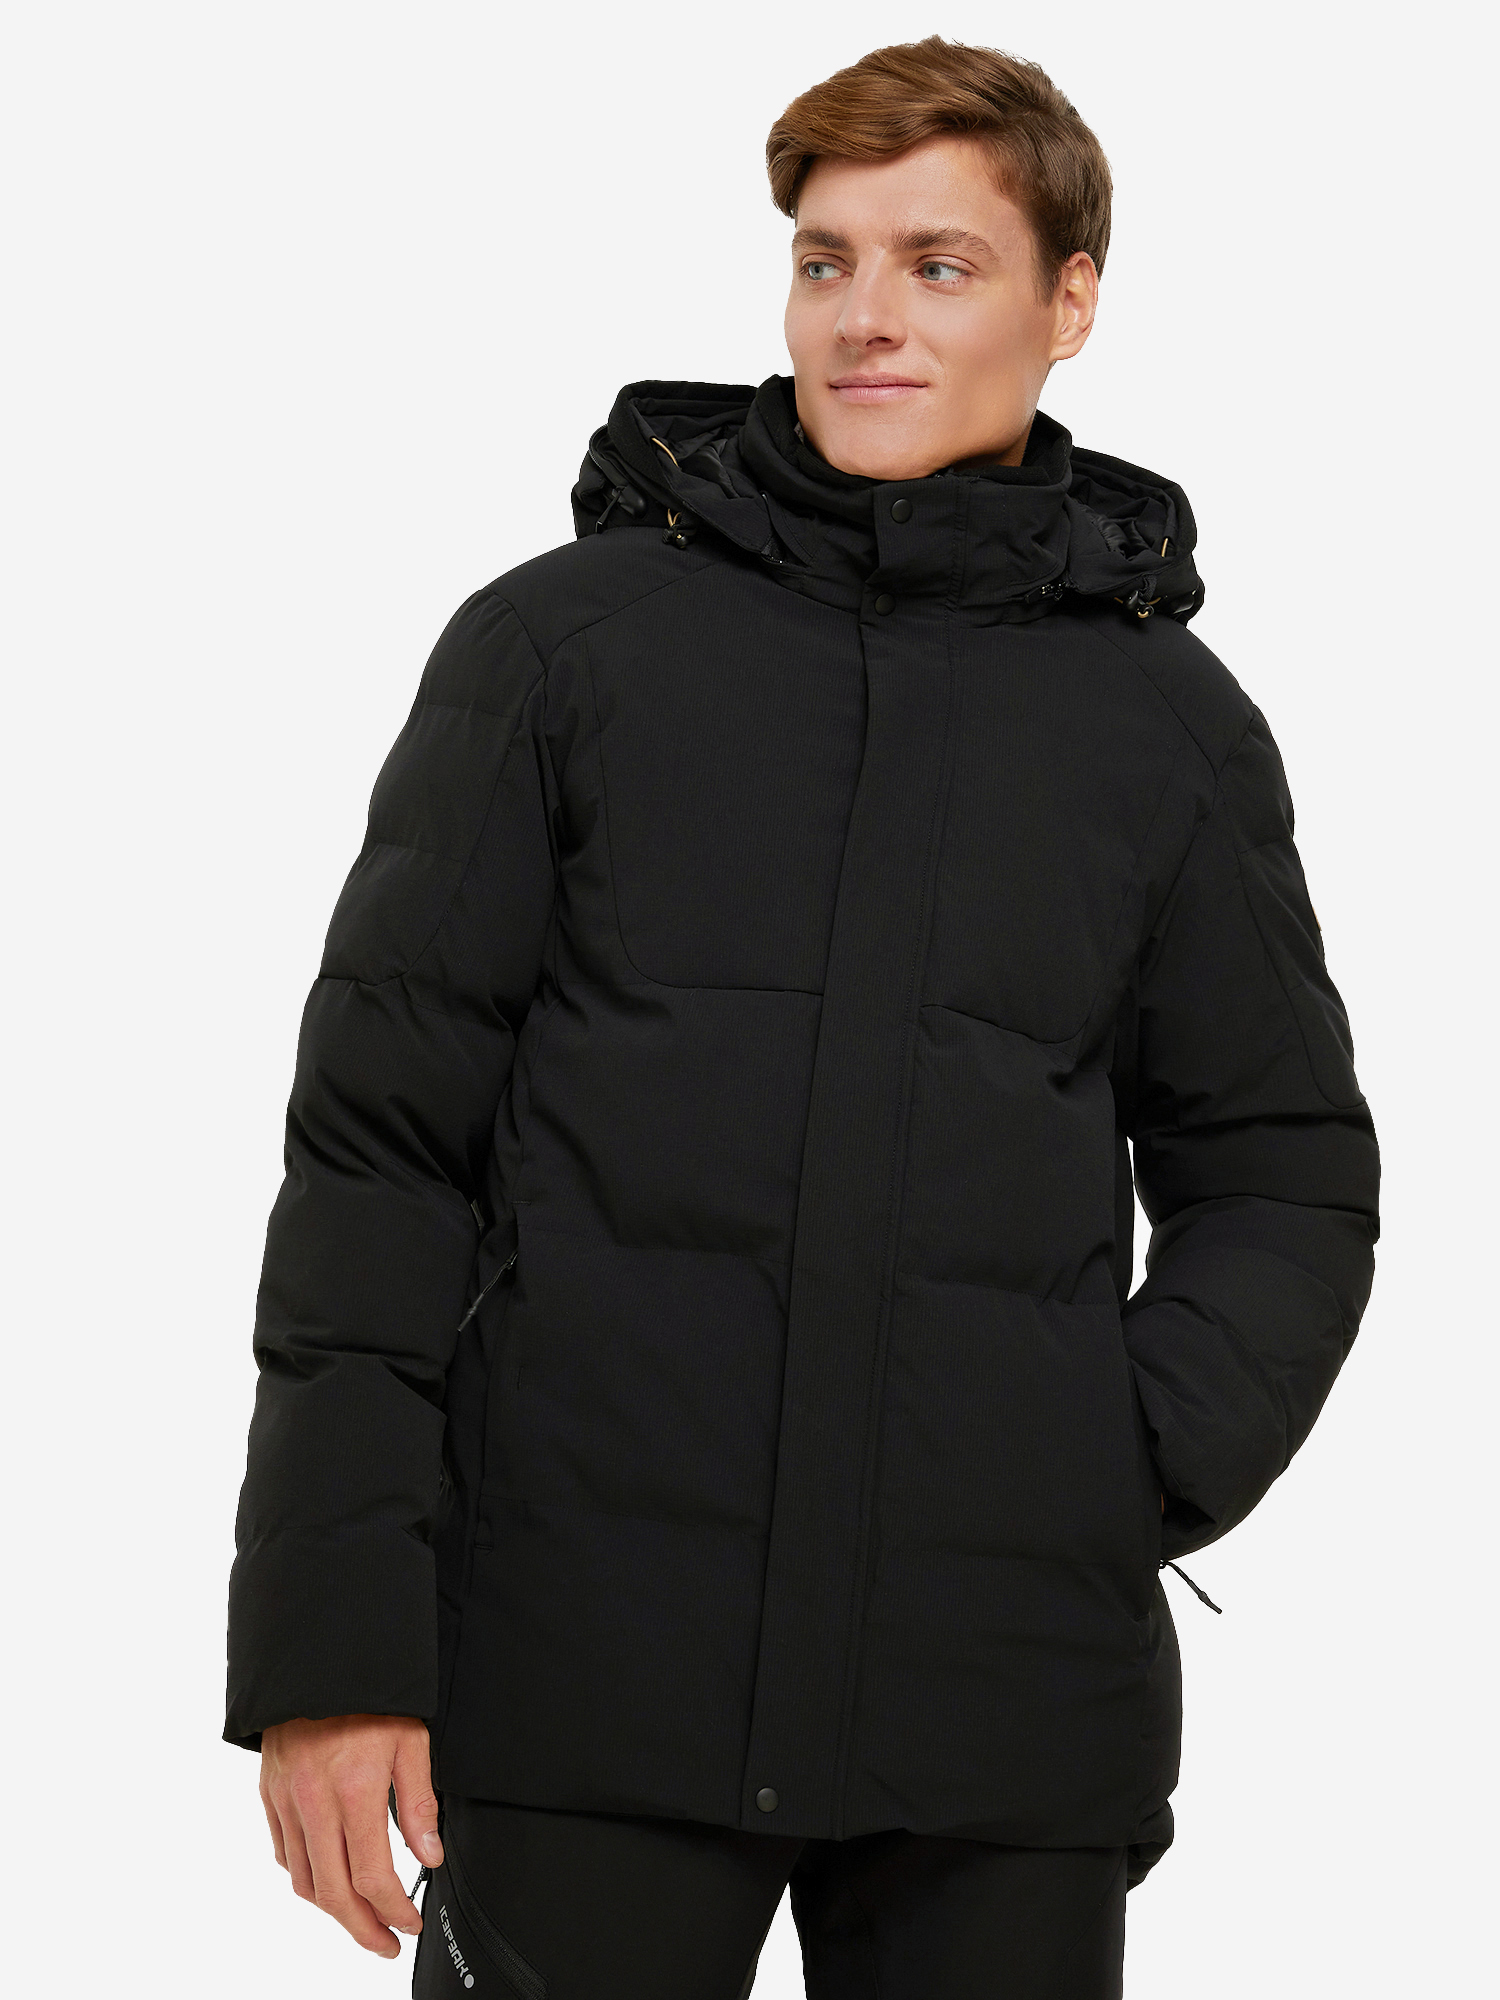 Куртка утепленная мужская IcePeak Bixby, Черный куртка утепленная мужская icepeak chester оранжевый